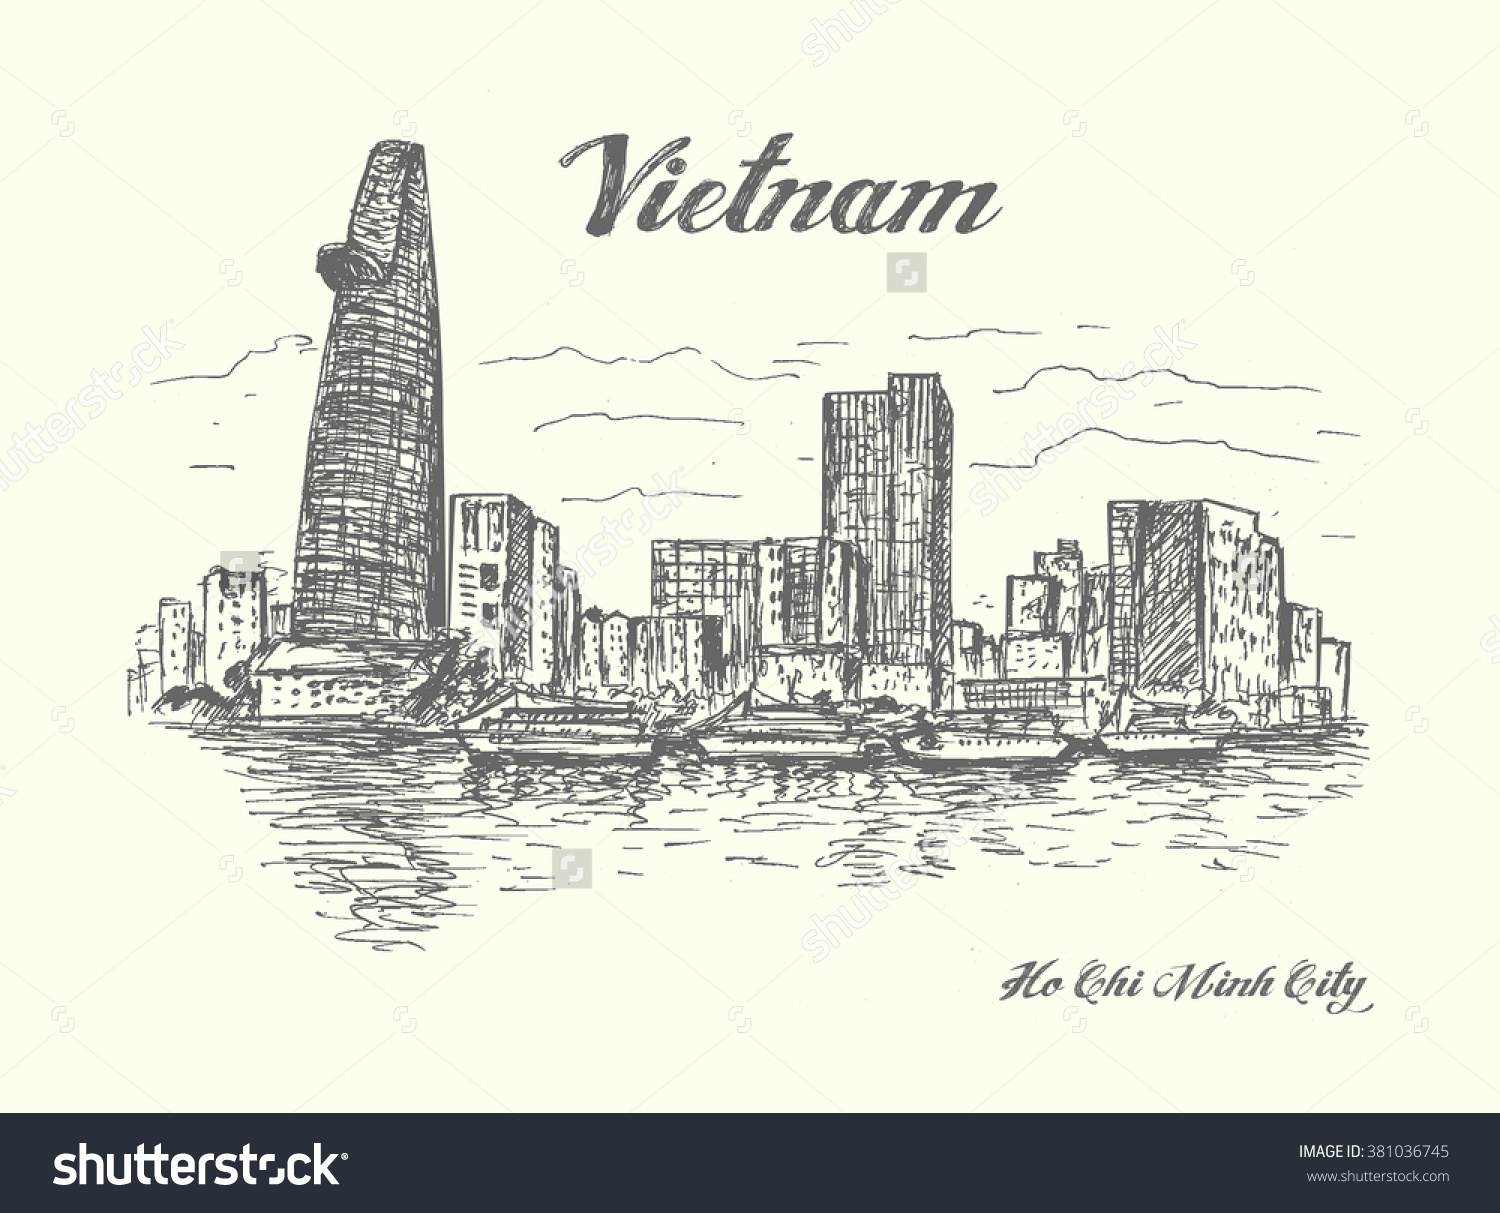 Vietnam Ho Chi Minh City Sketched Stock Vector 381036745.